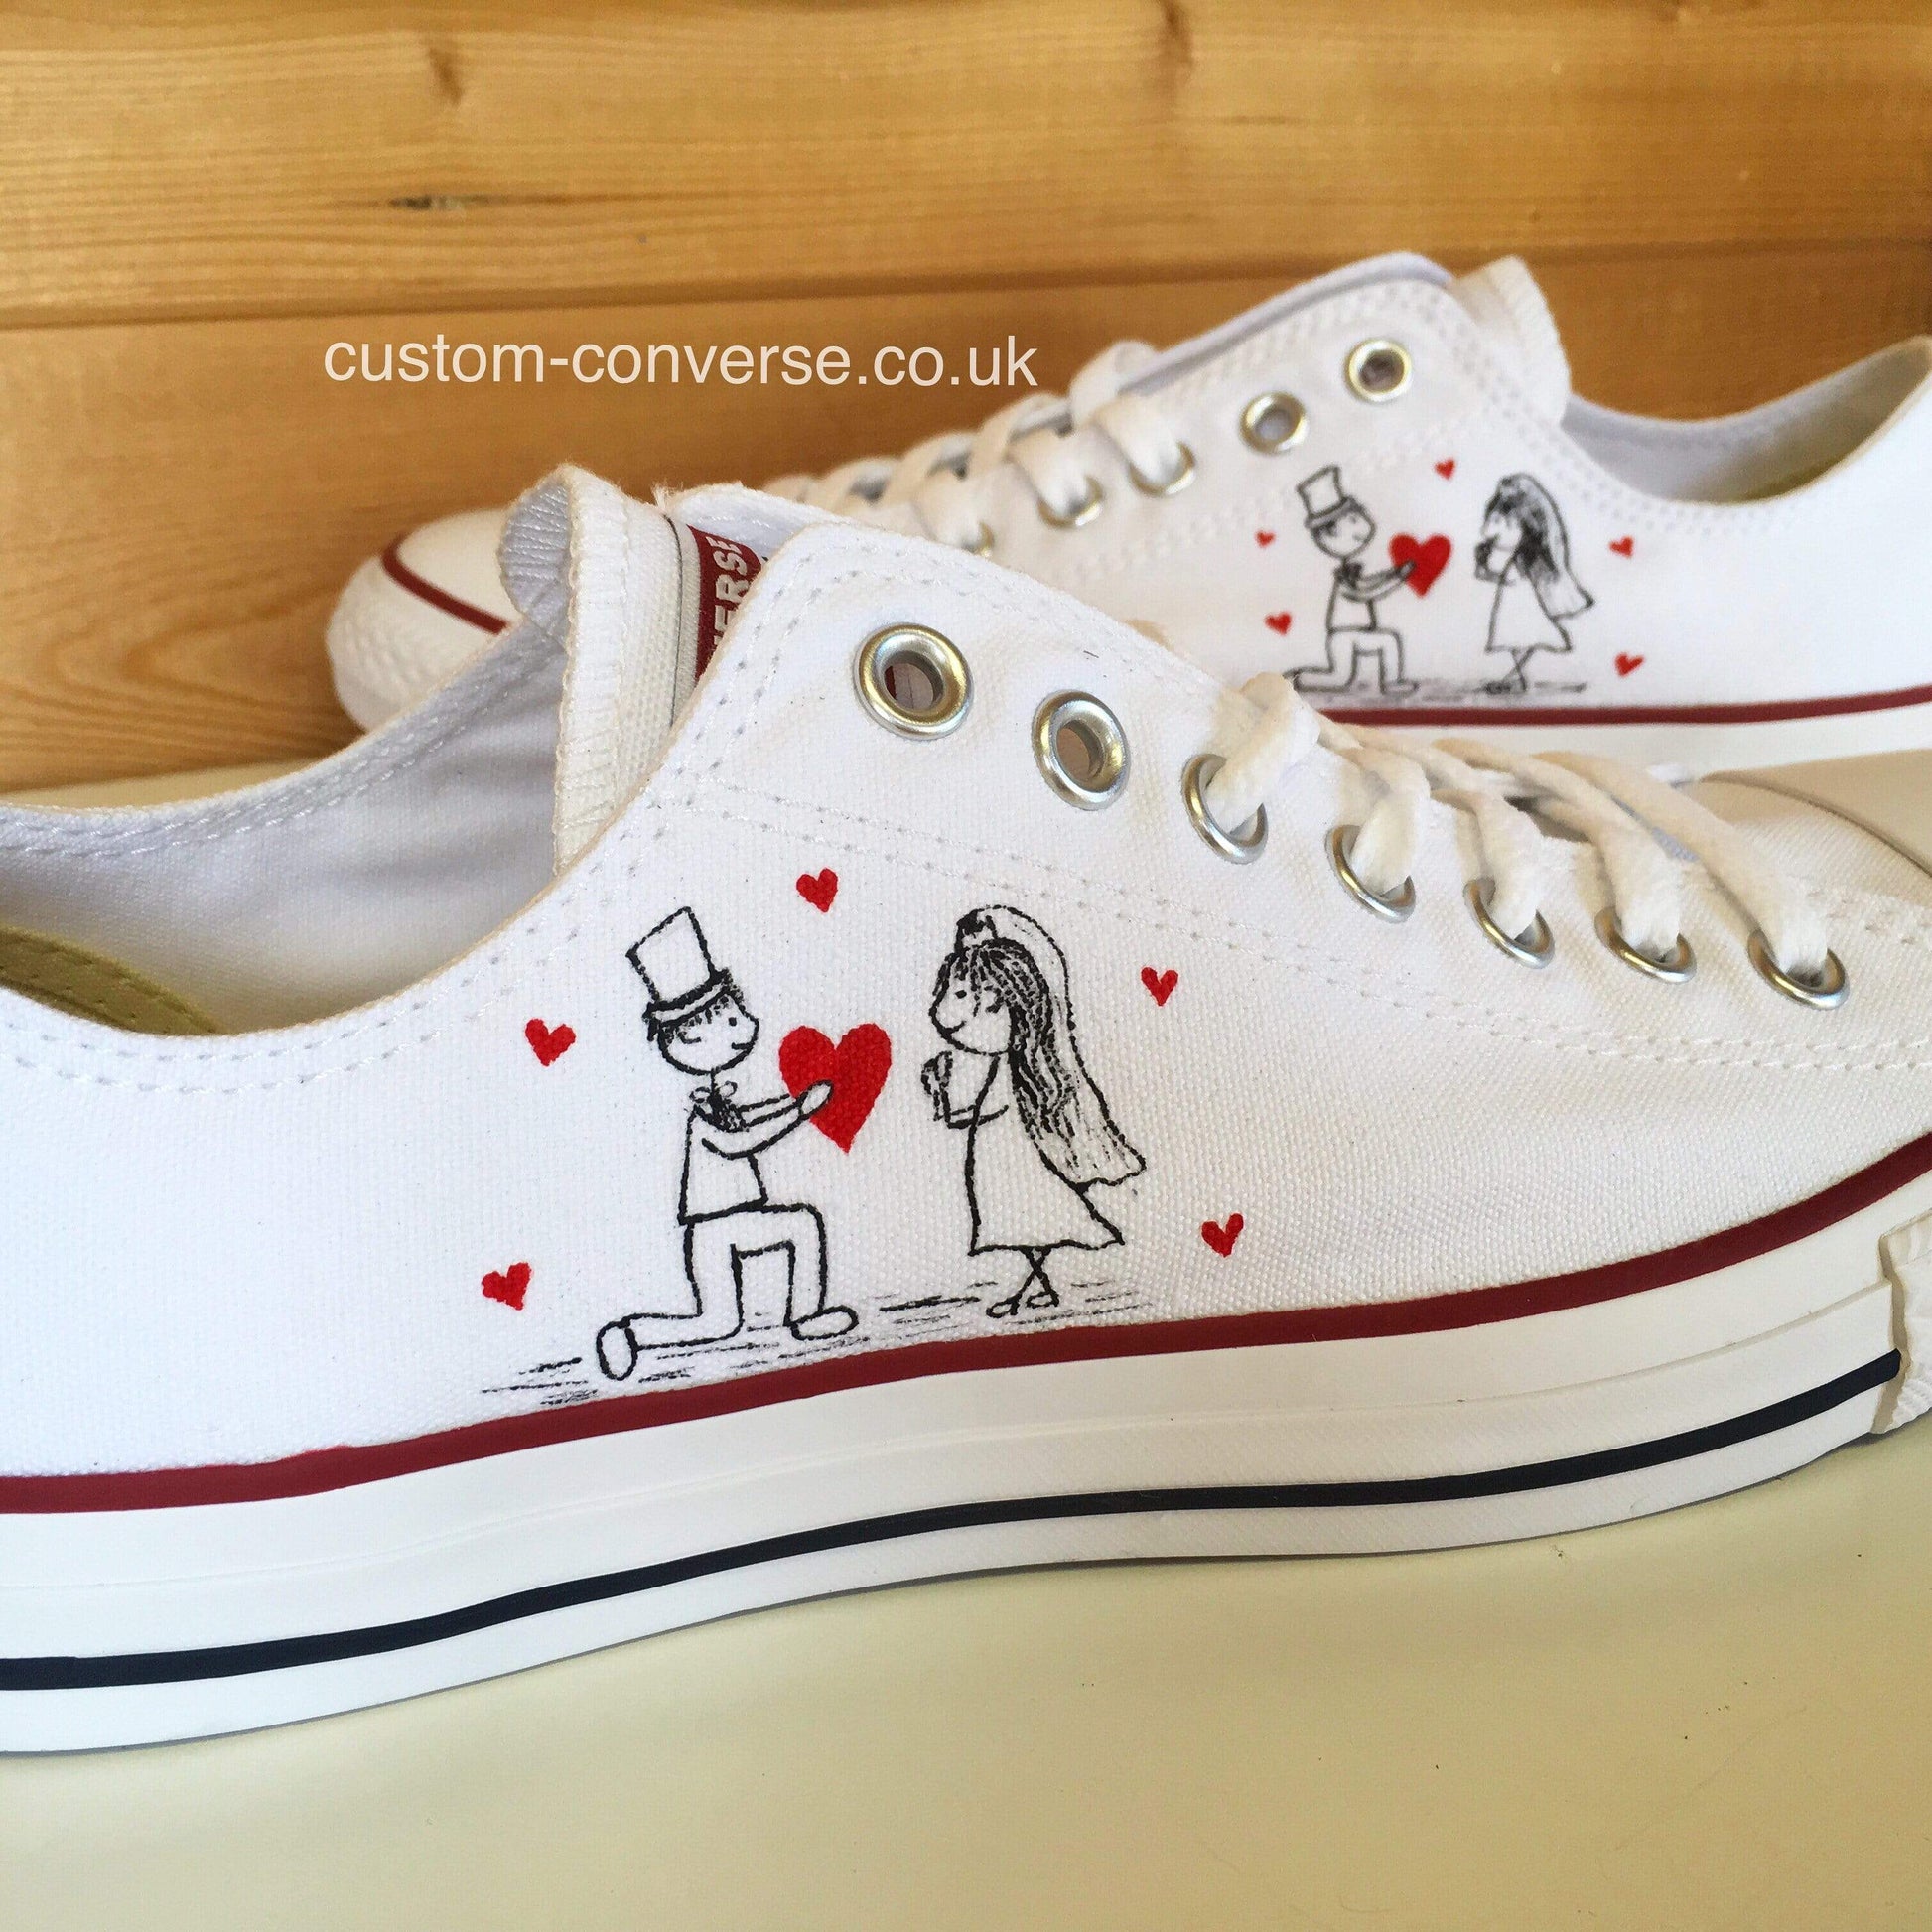 Bride & Groom Doodle - Custom Converse Ltd.